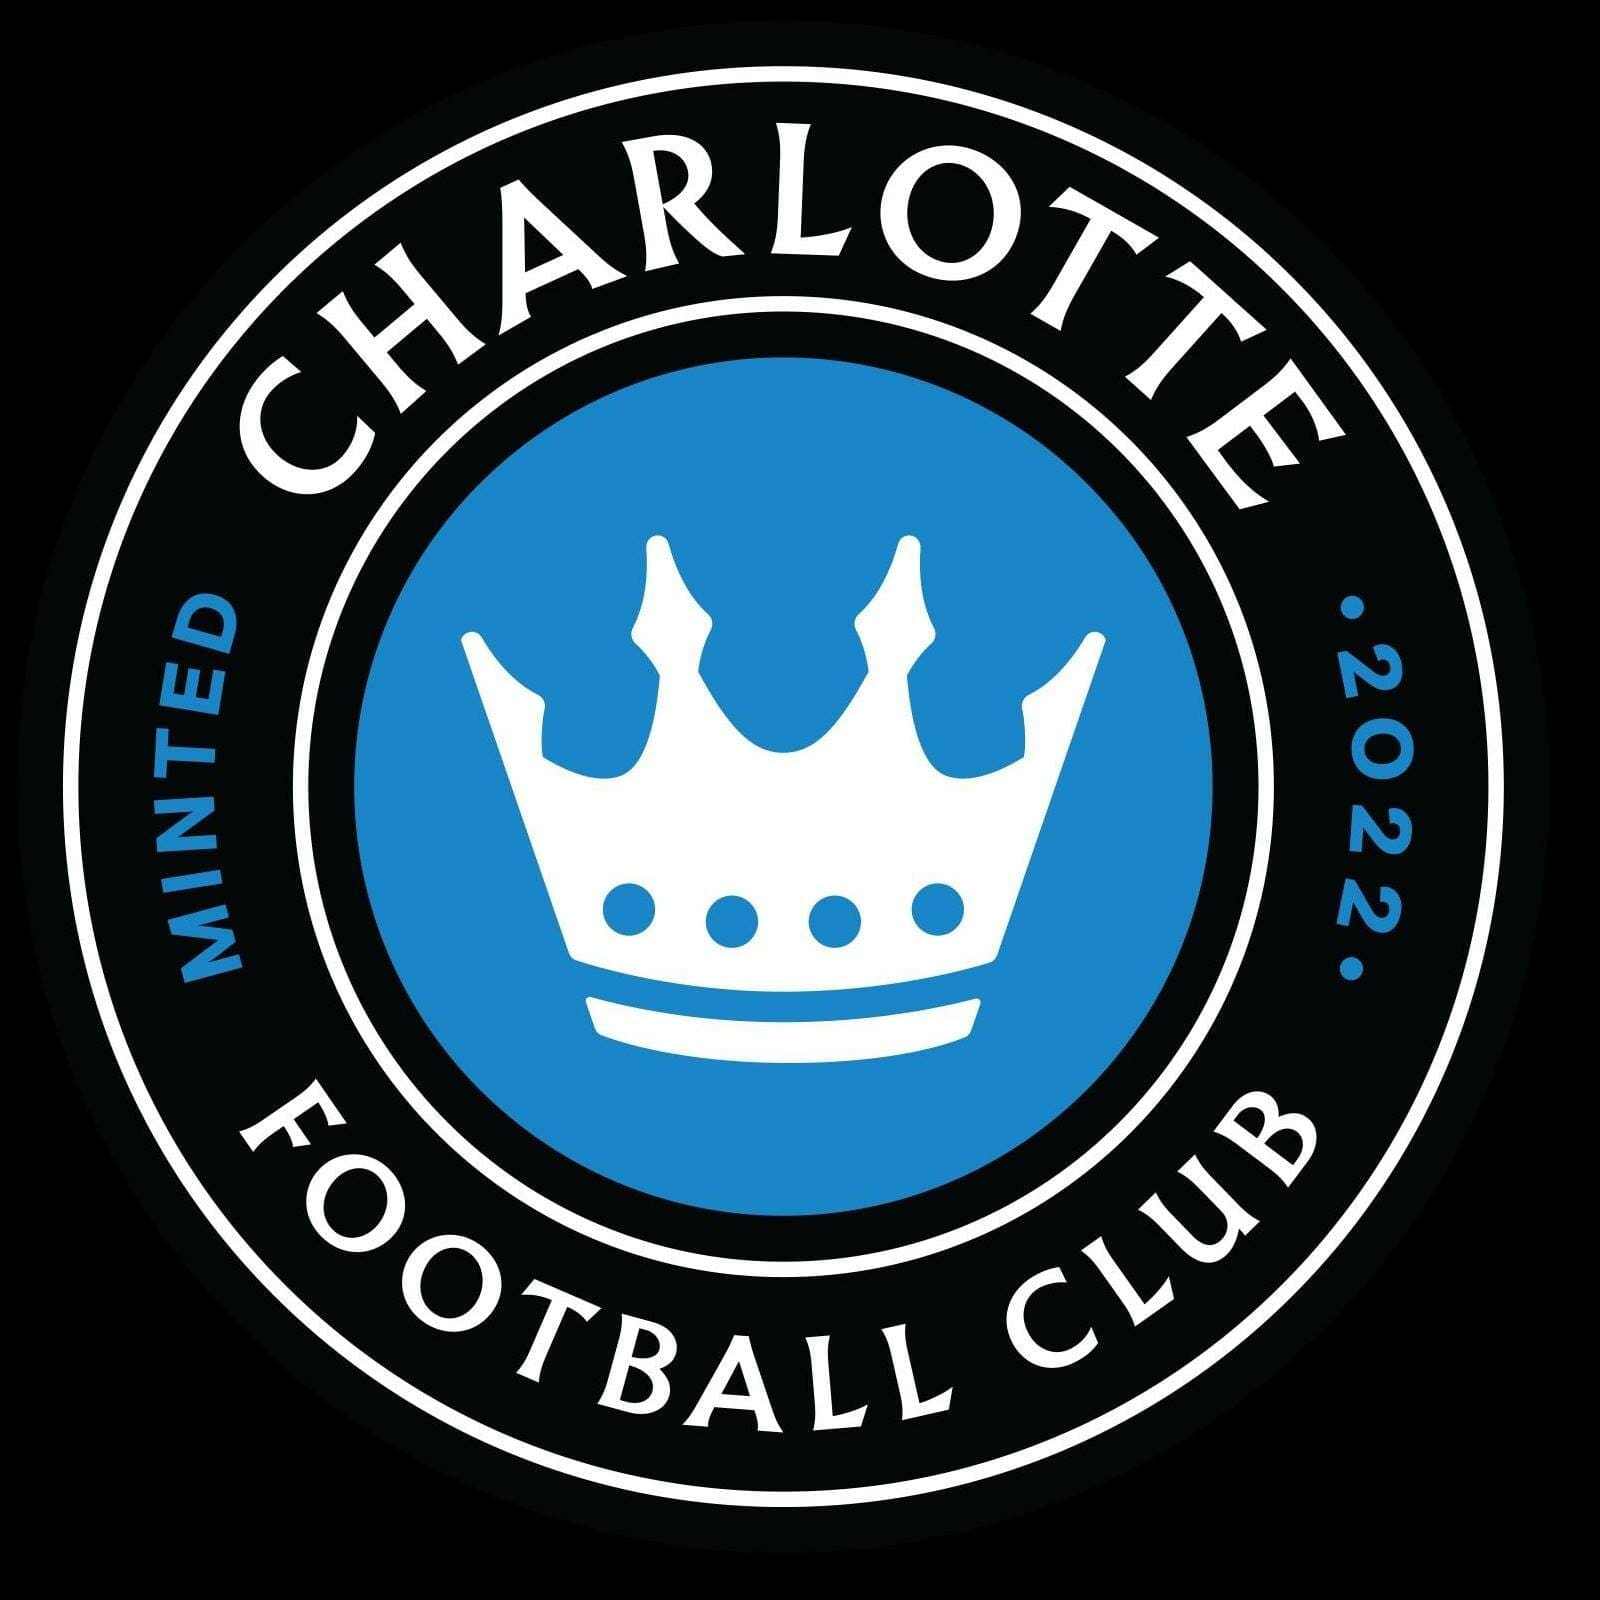 Charlotte Football Club | Organizational Profile, Work & Jobs